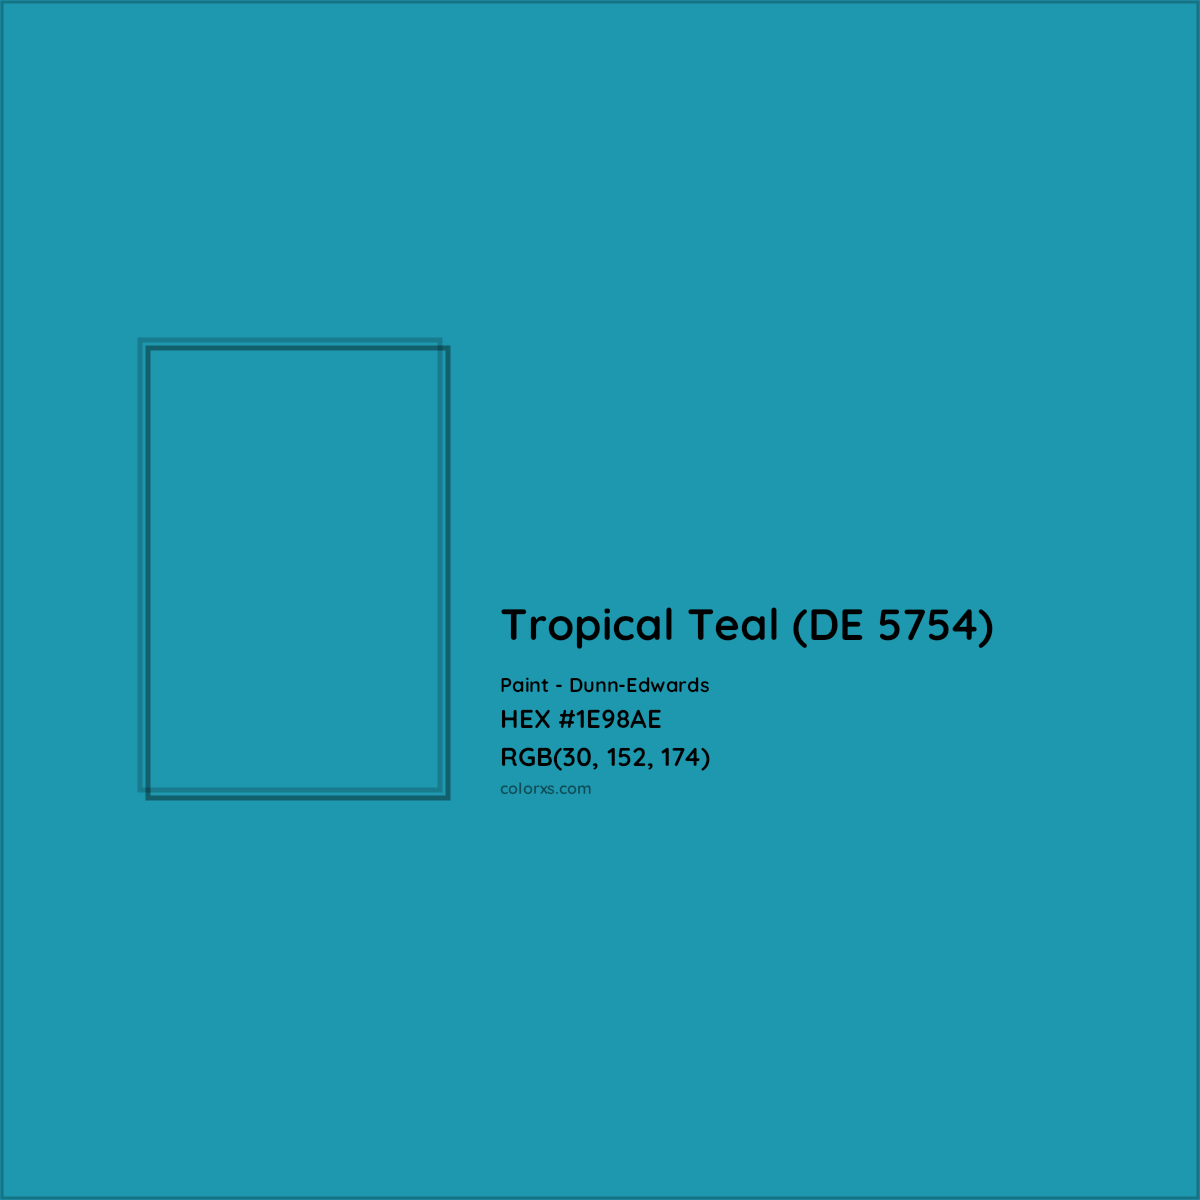 HEX #1E98AE Tropical Teal (DE 5754) Paint Dunn-Edwards - Color Code